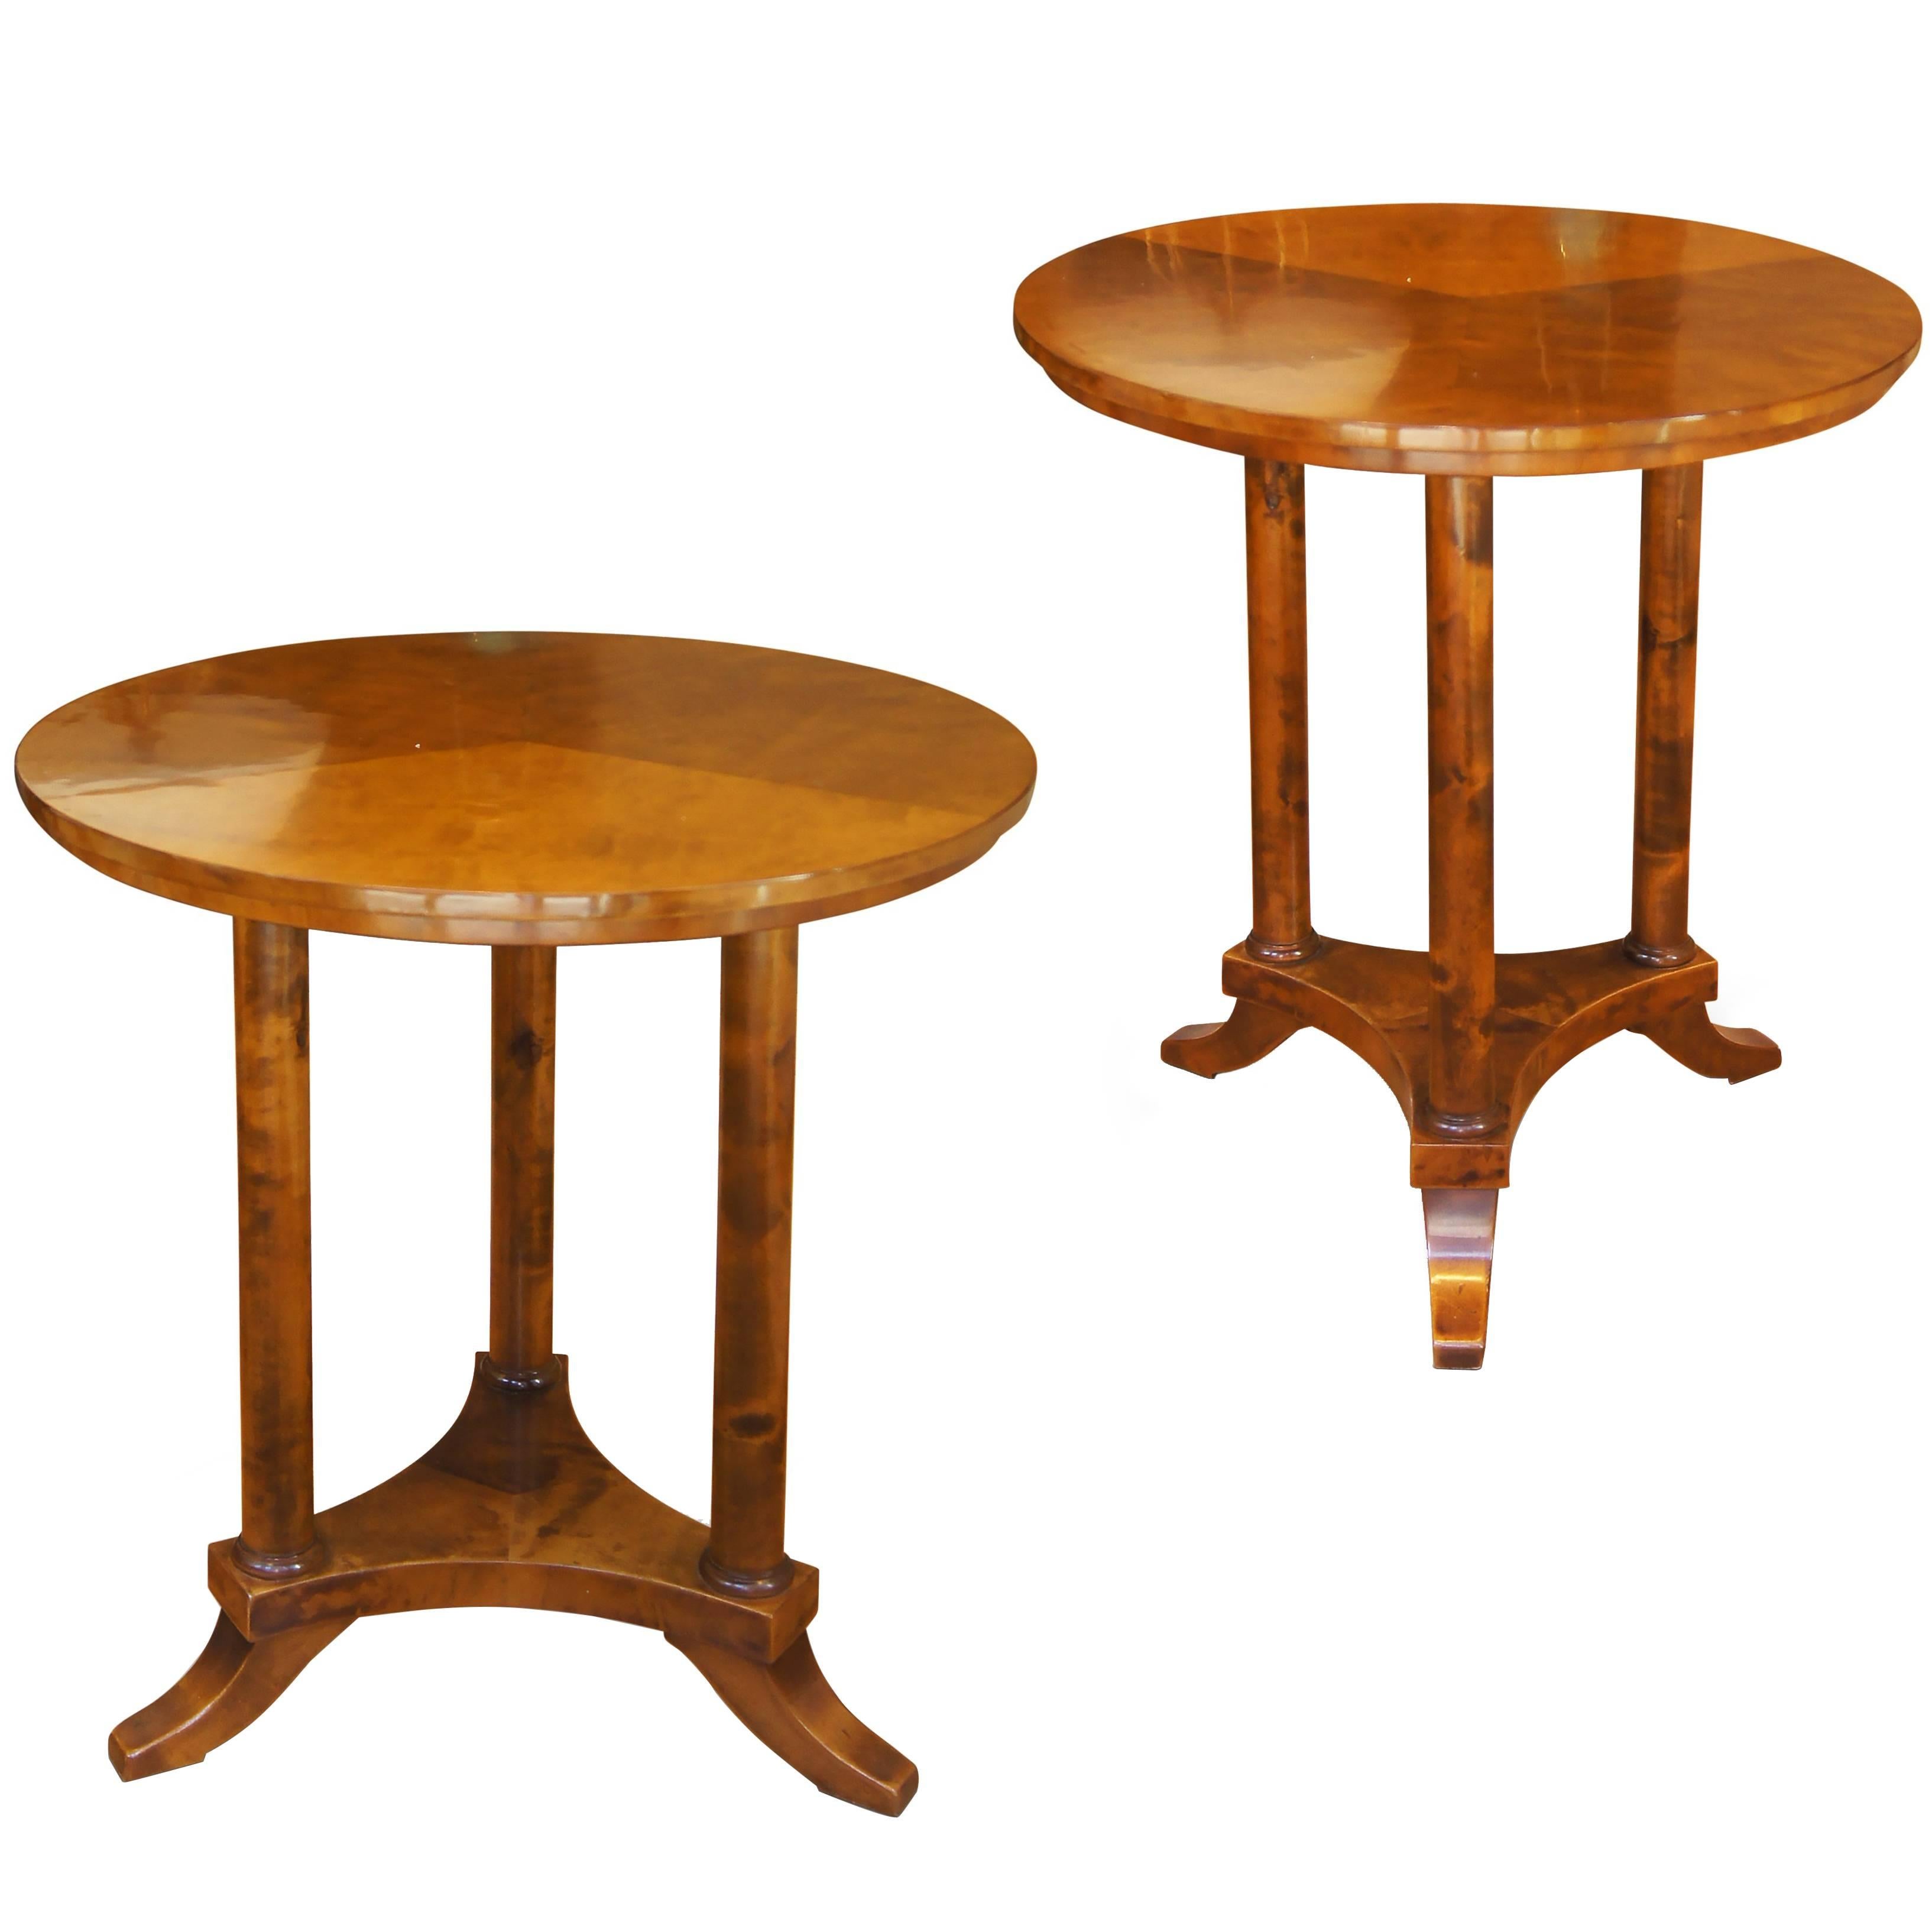 Pair of side tables in birch by Nordiska Kompaniet attrib. to Axel Einar Hjorth For Sale